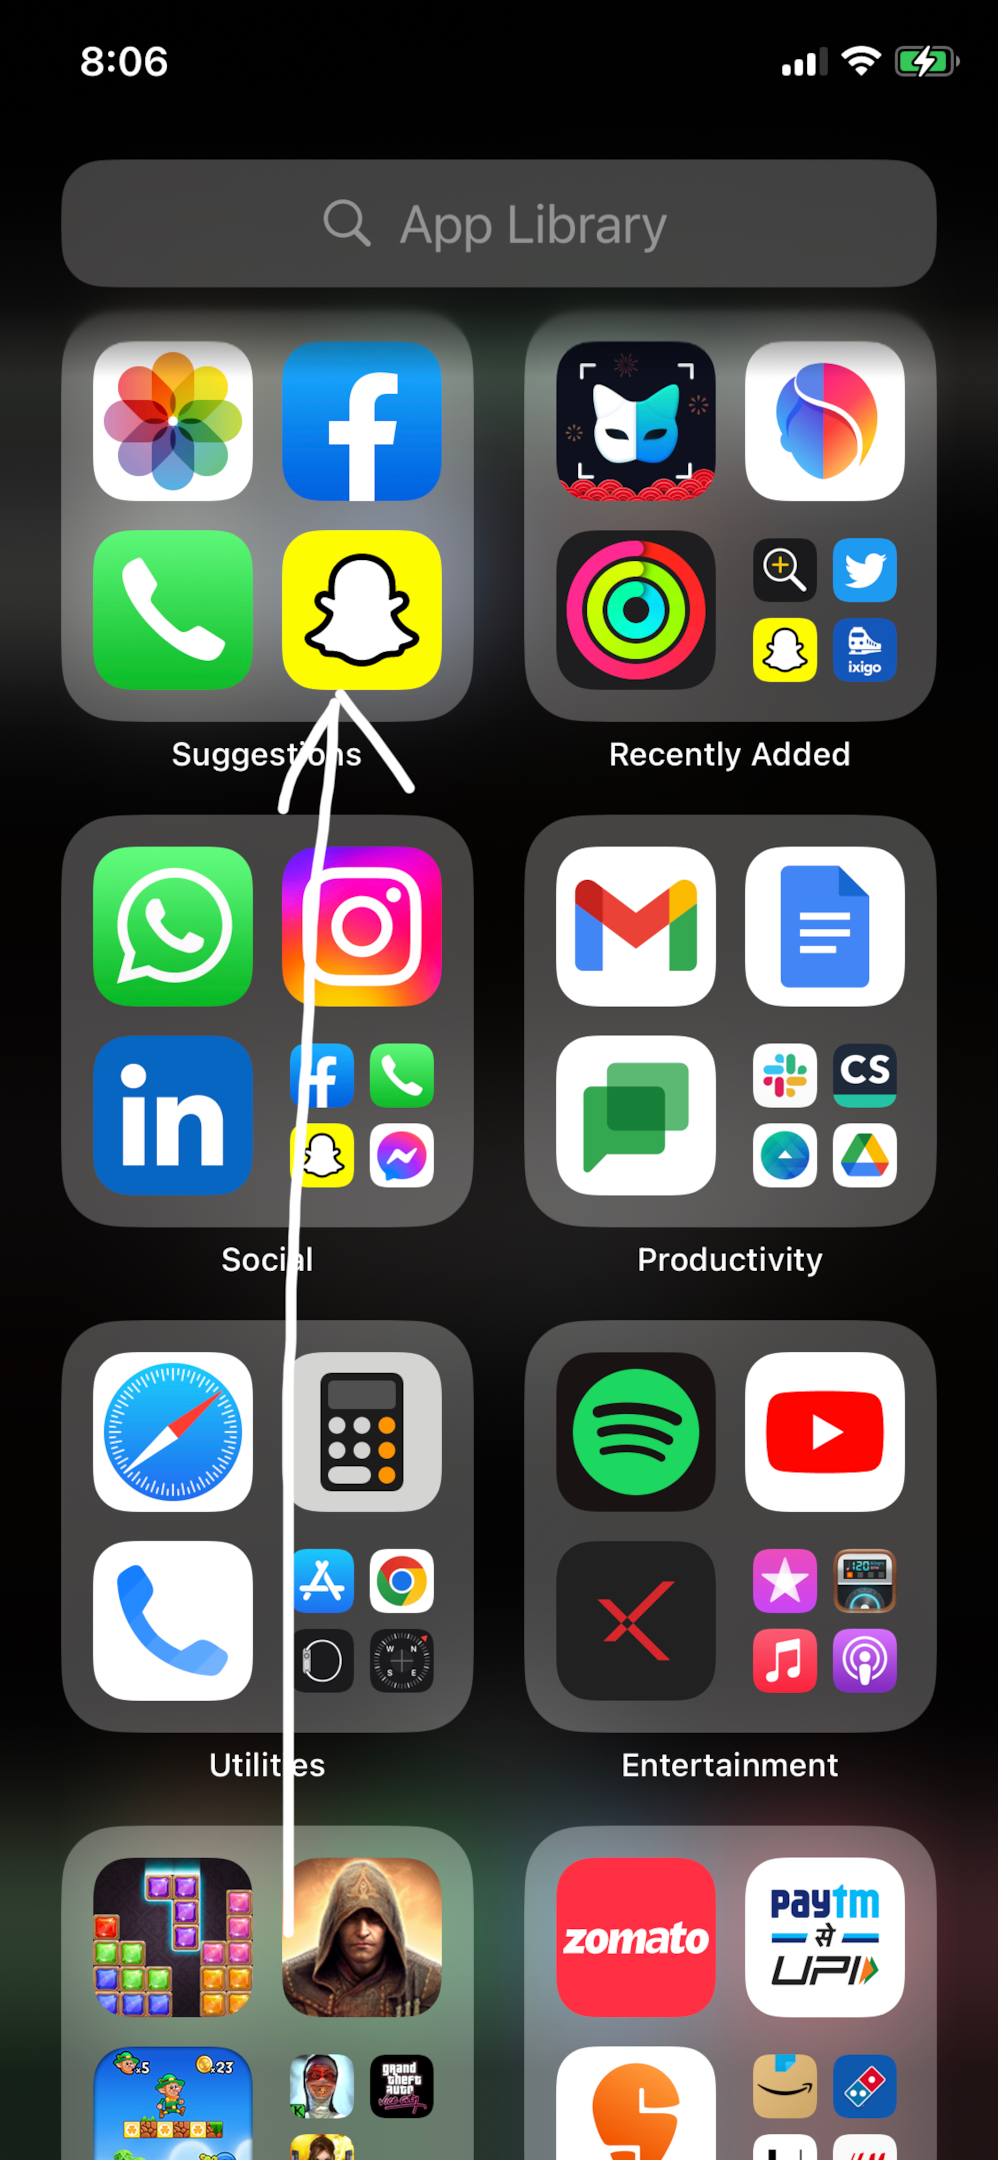 Screenshot of Snapchat app